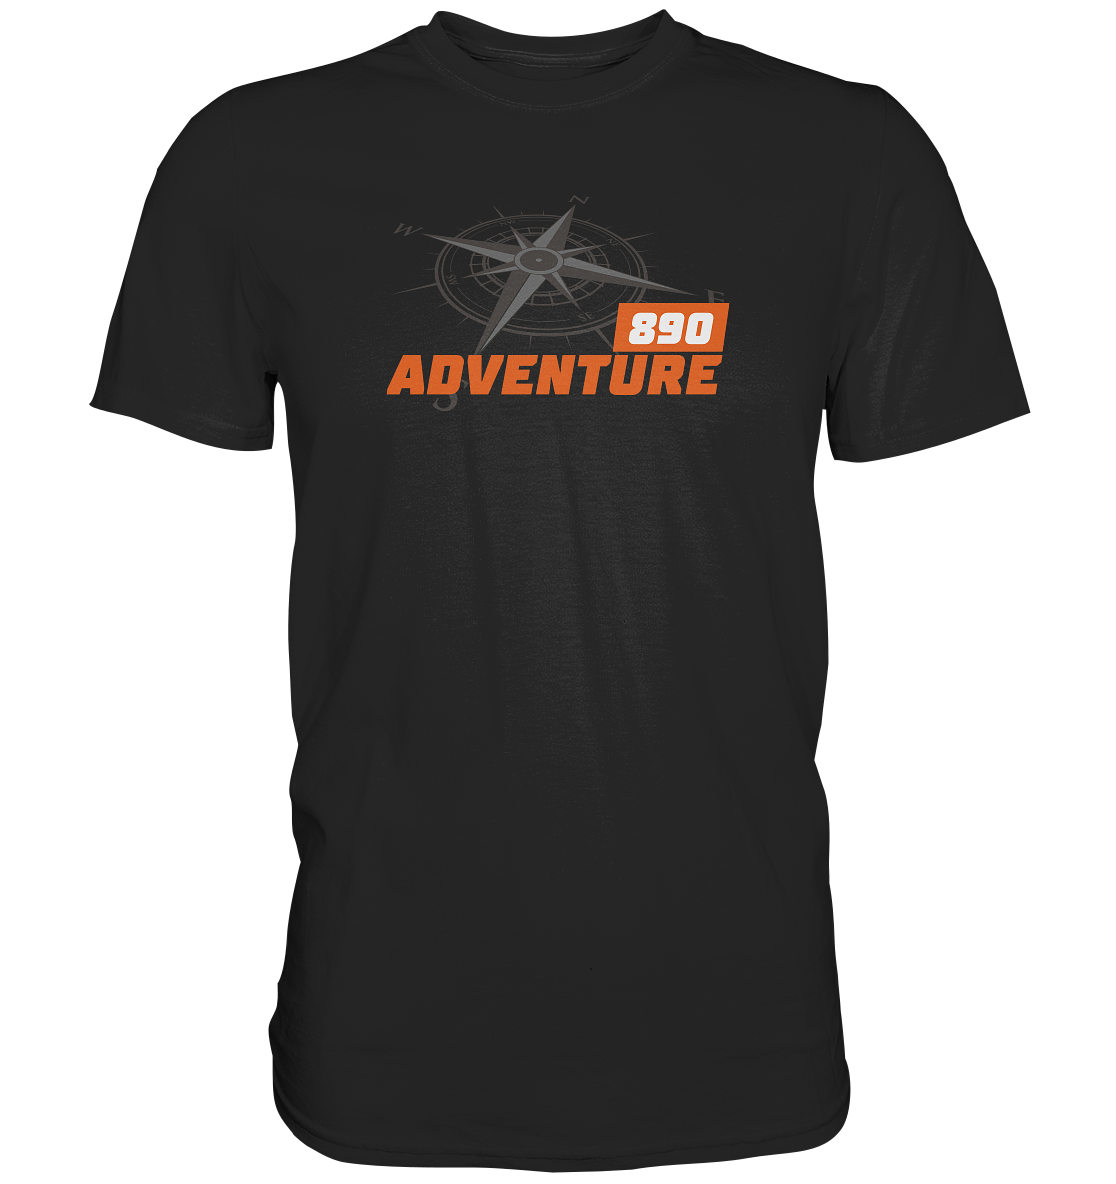 Adventure 890 Kompass - Premium unisex Shirt